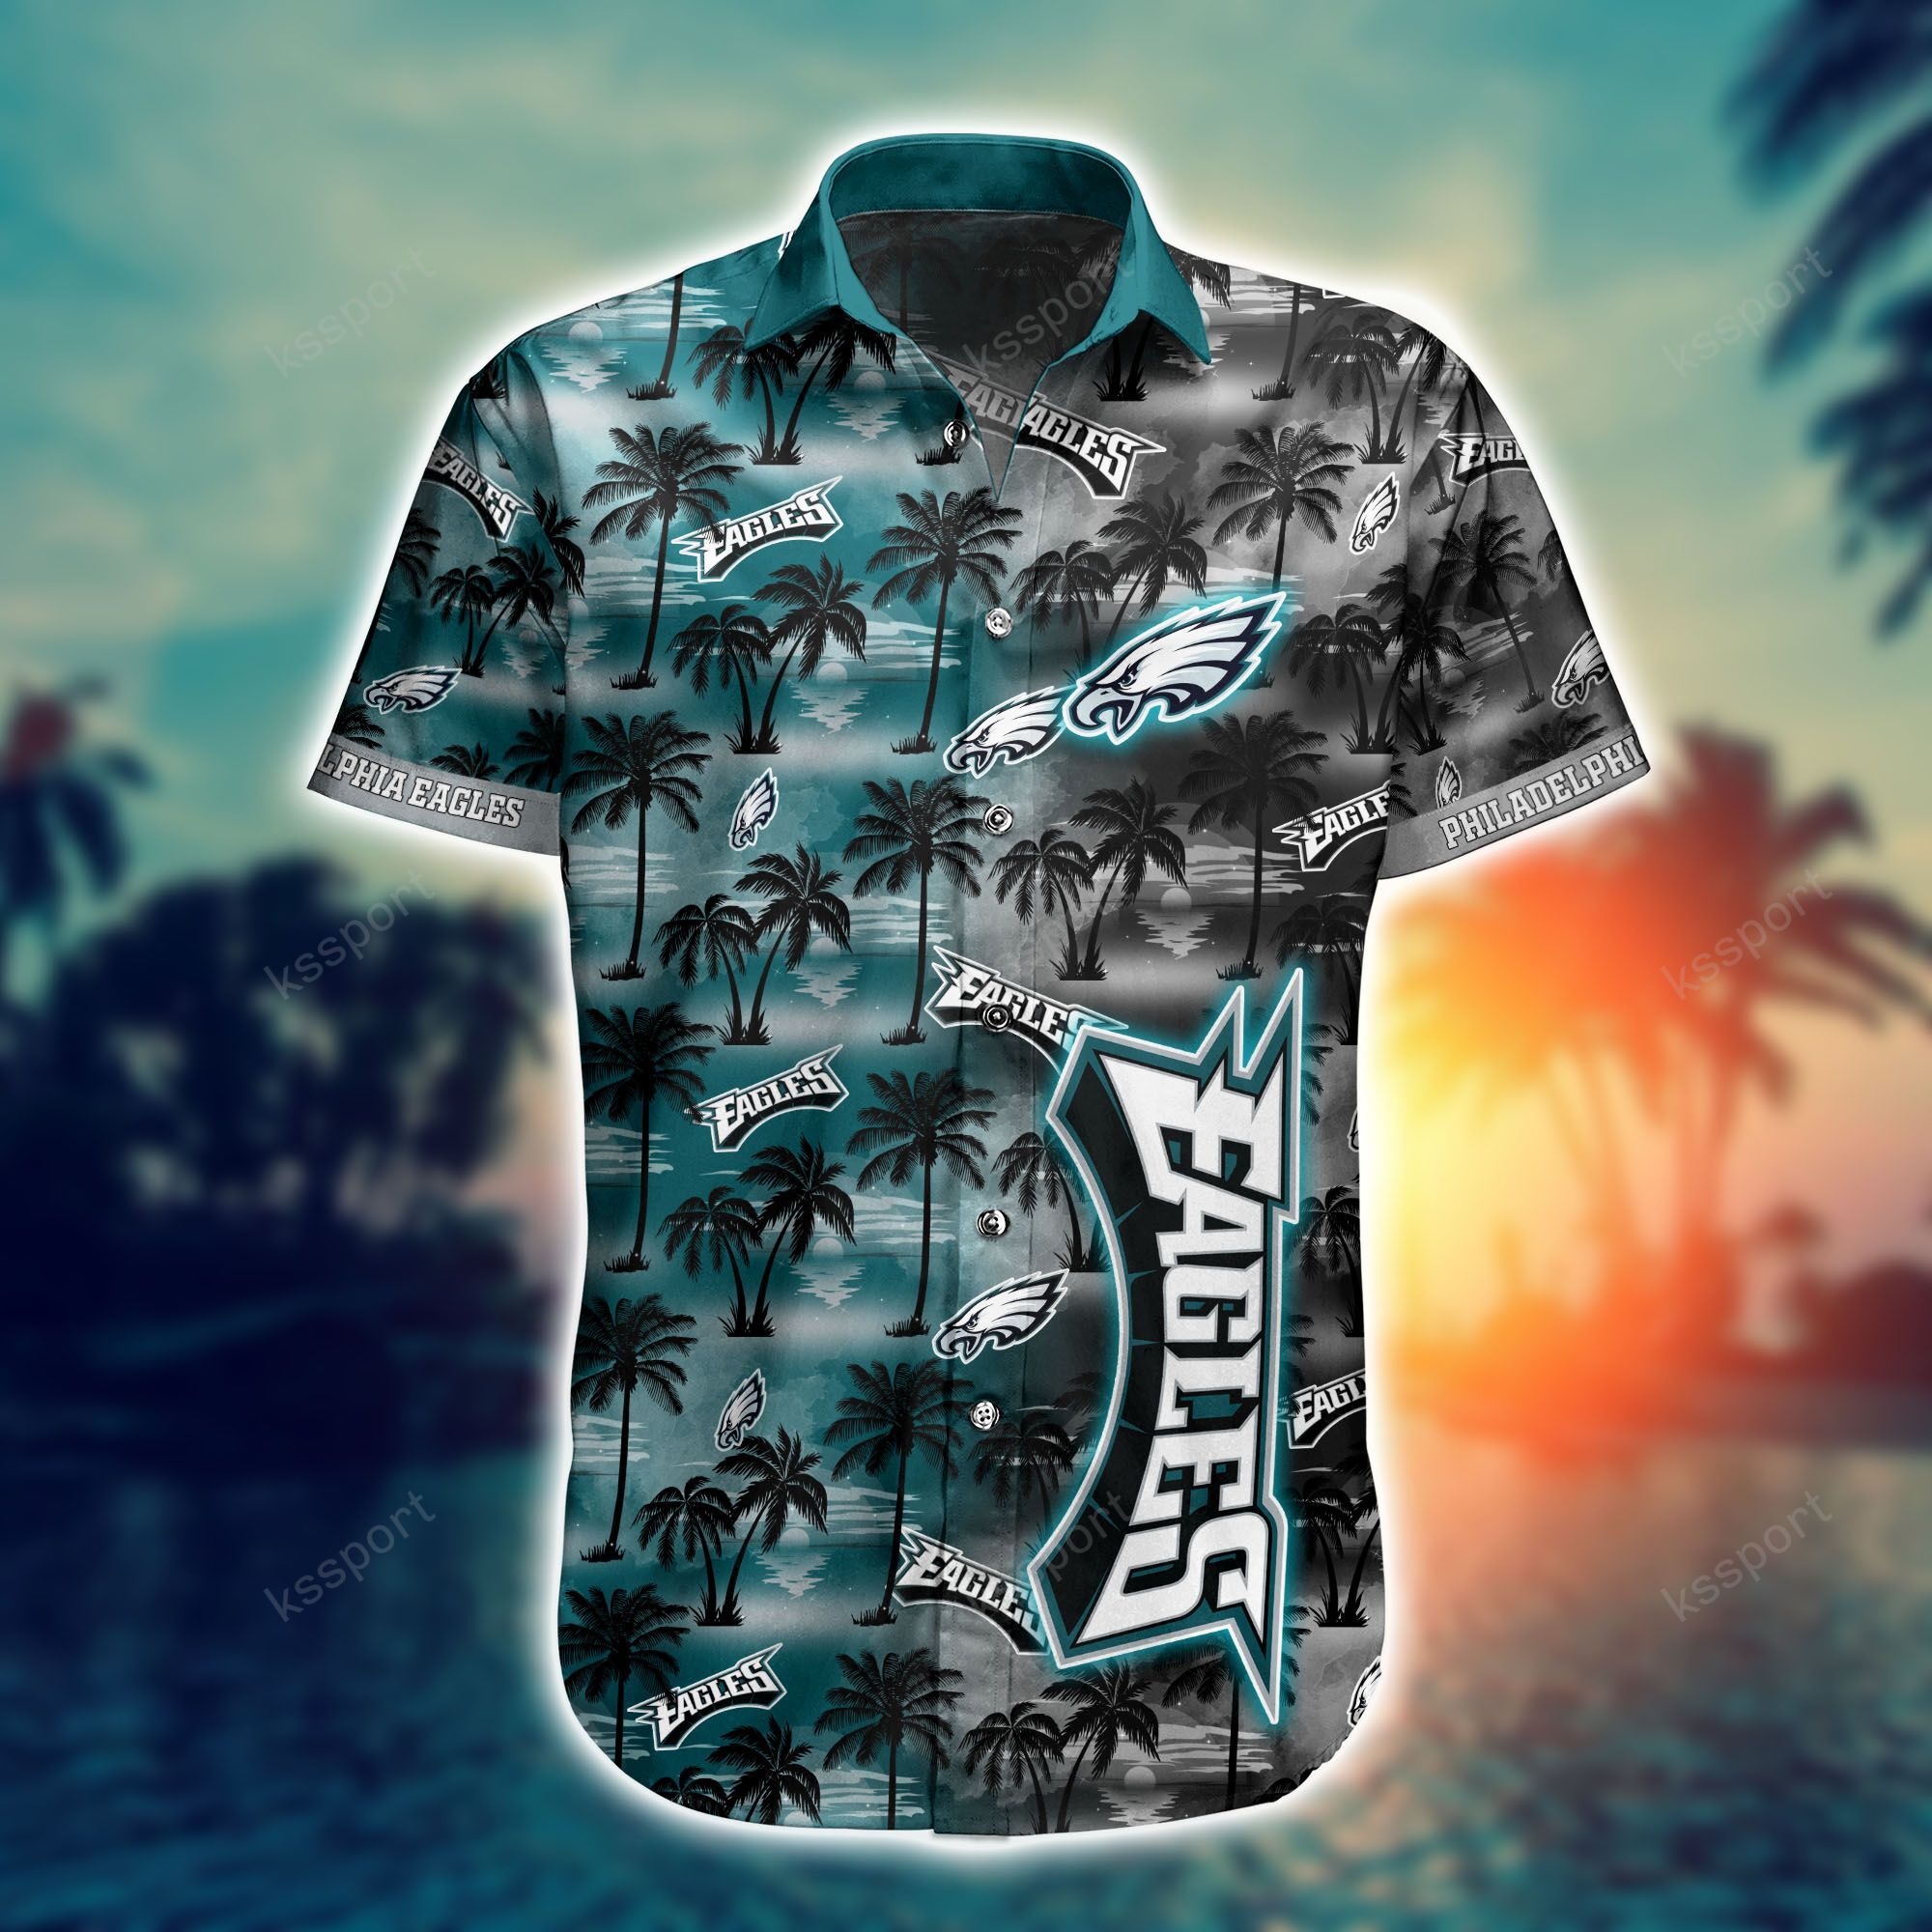 Hawaiian shirt and shorts is a great way to look stylish at a beach party 127